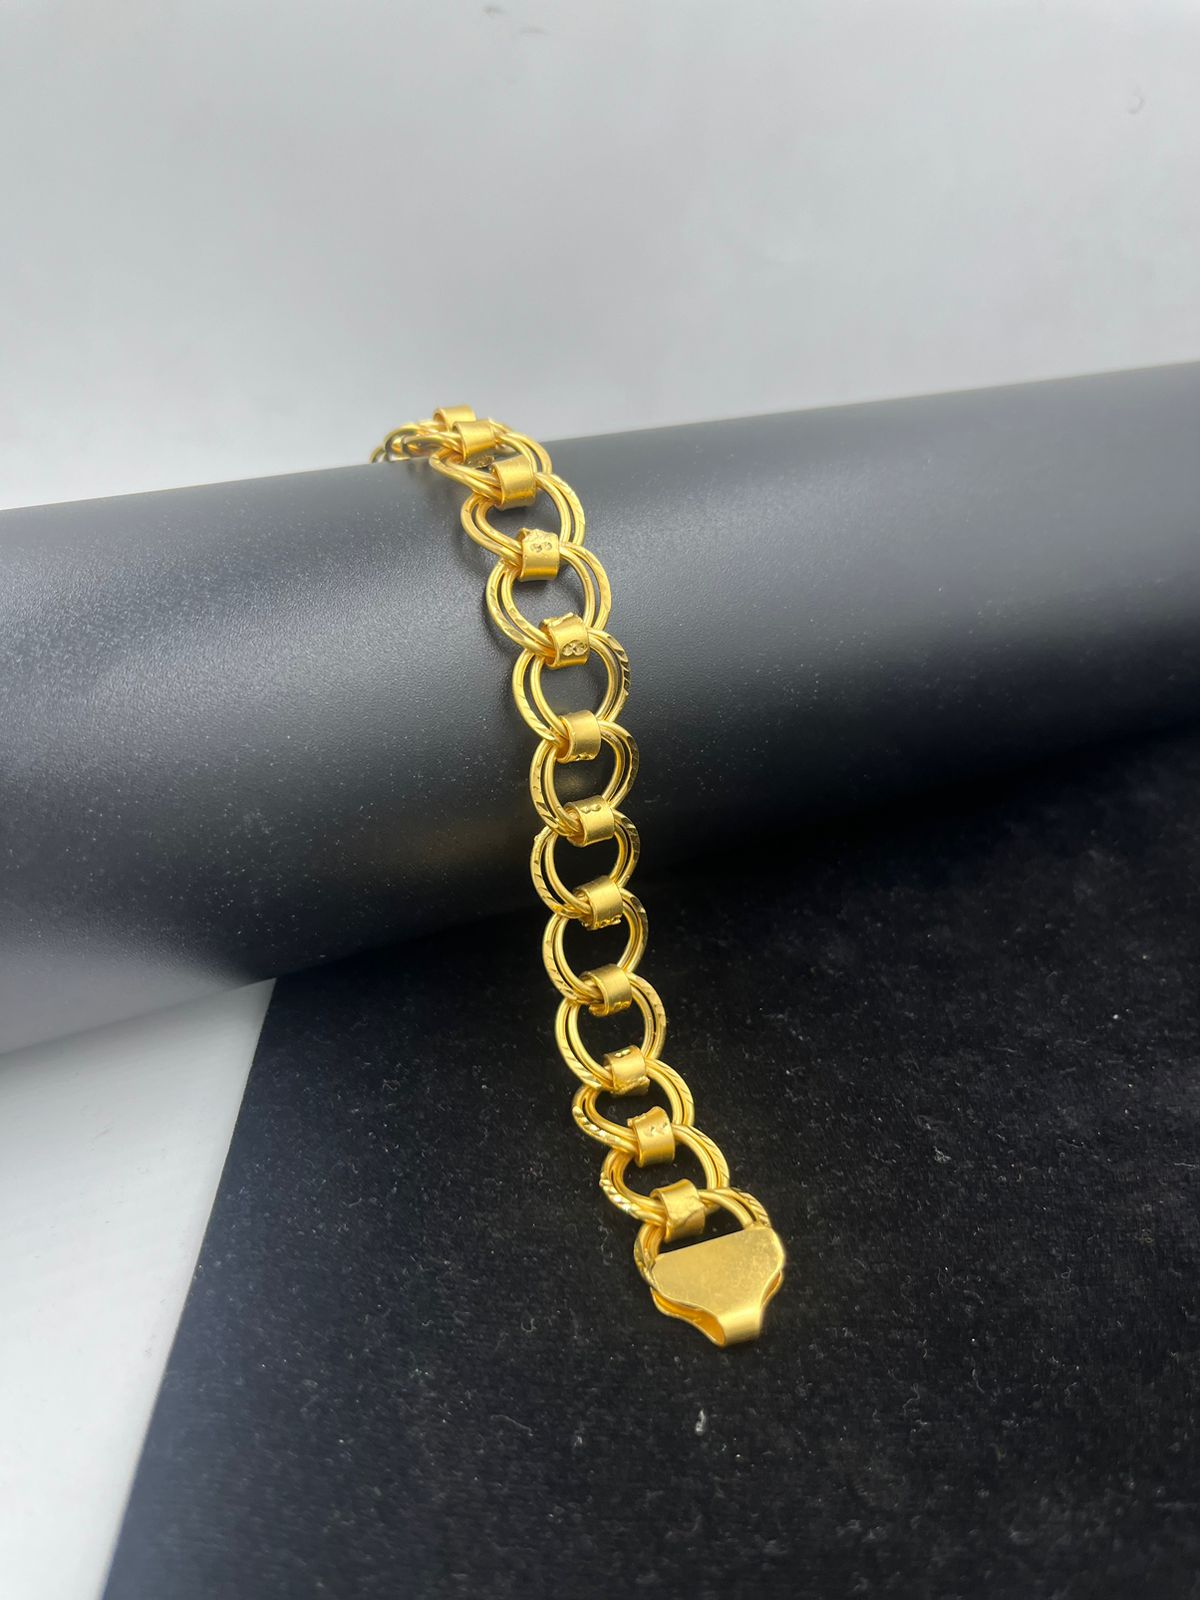 2 Gram Gold Bracelets Designs: That Loves by Indian Women